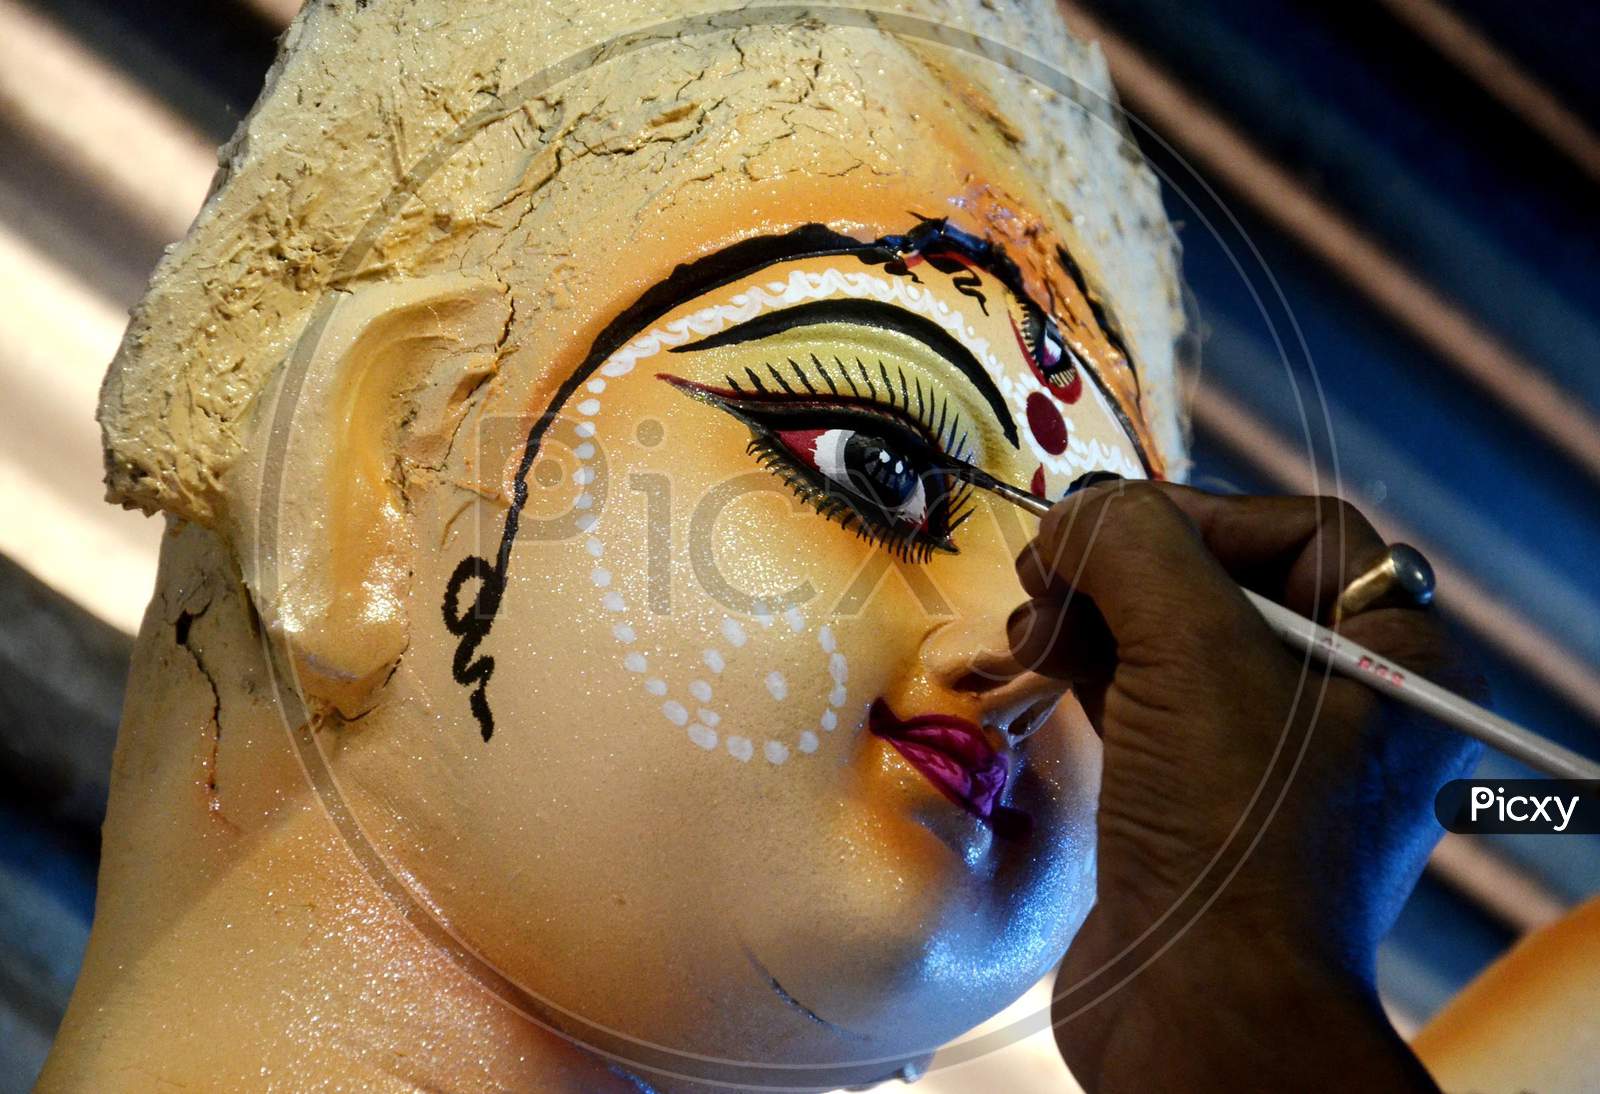 An artist gives final touches to an idol of Goddess Durga